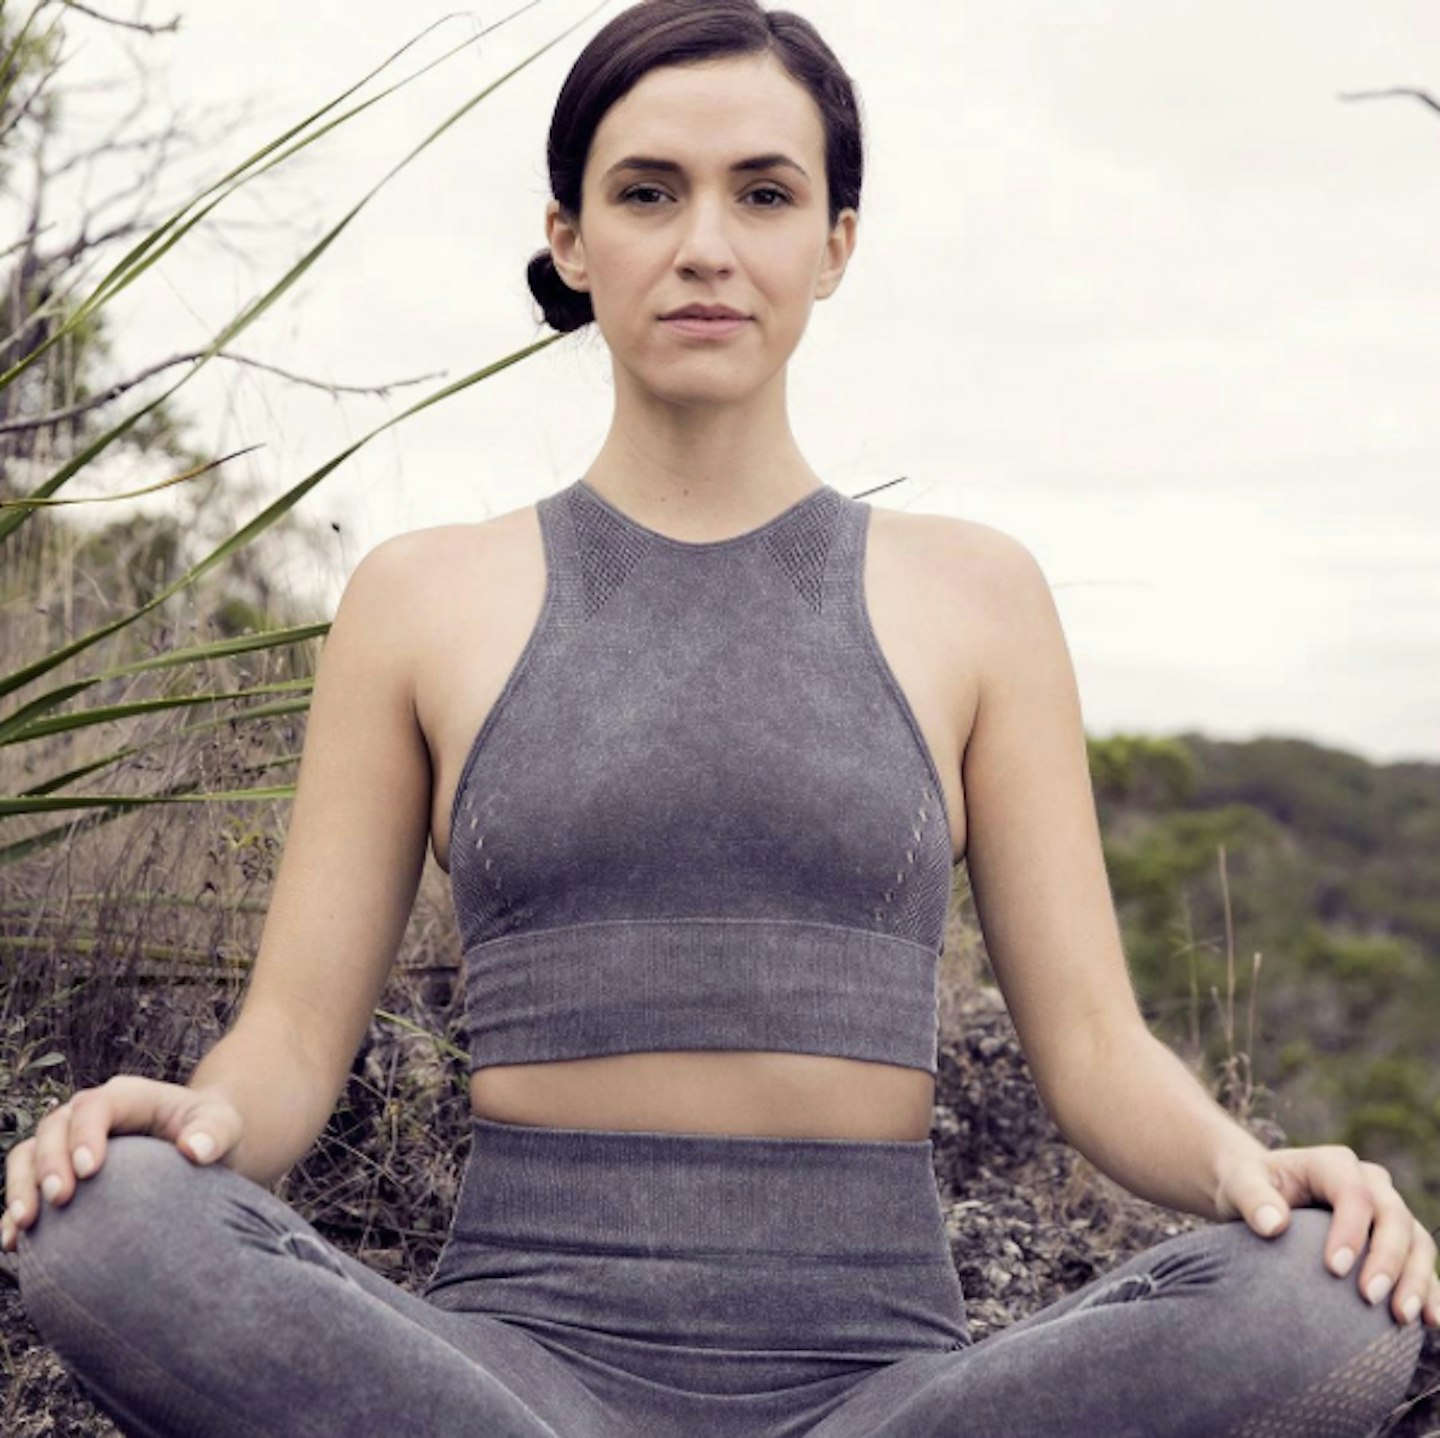 Meet Adriene Of 'Yoga With Adriene' The YouTube Yoga Sensation